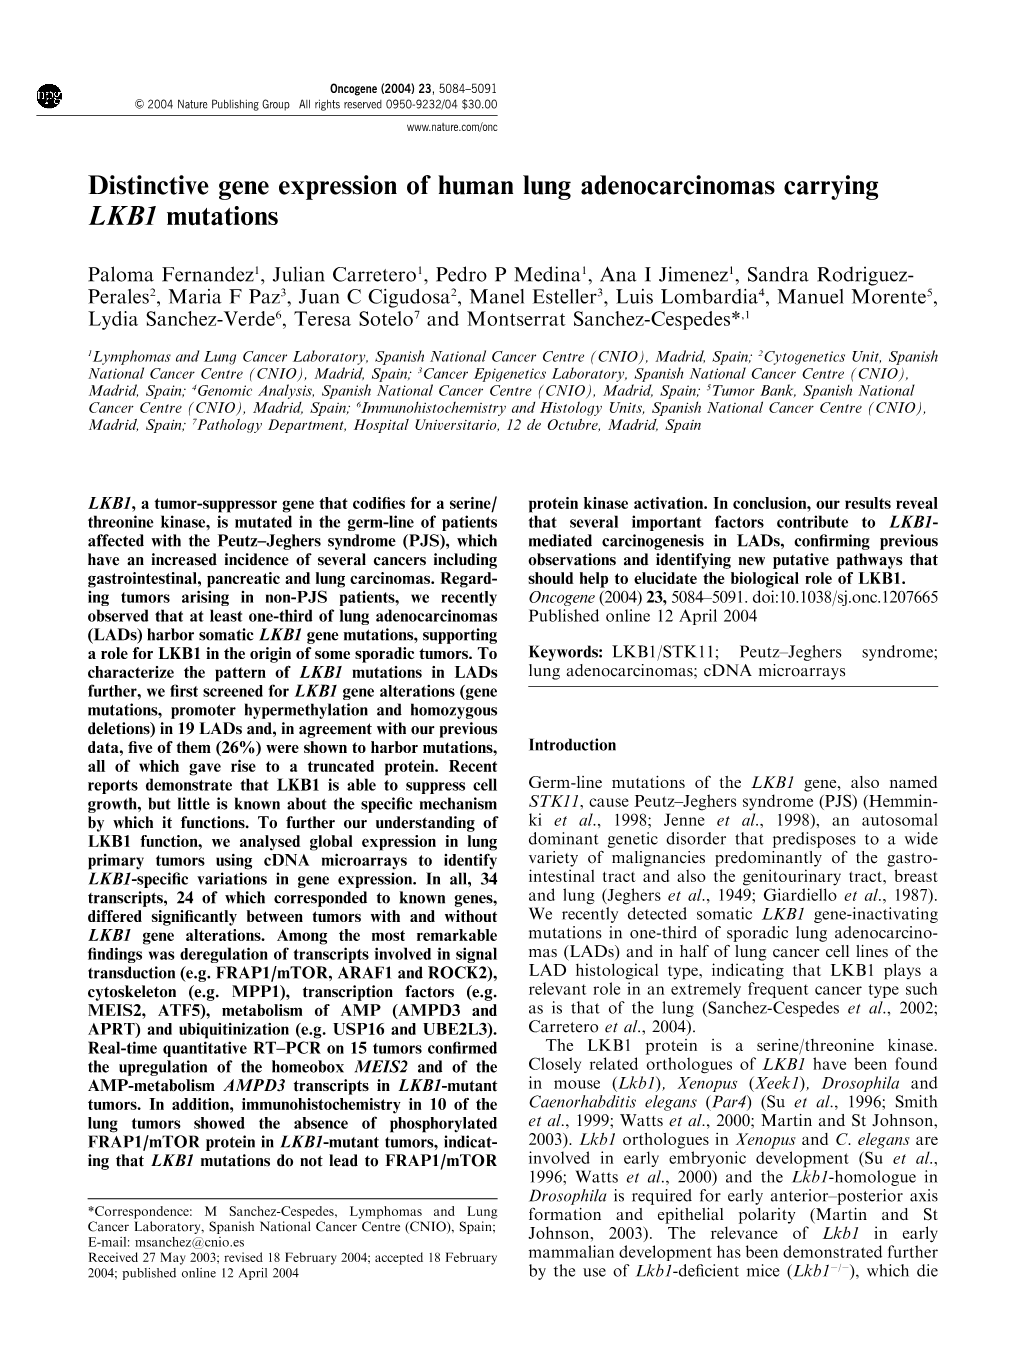 Distinctive Gene Expression of Human Lung Adenocarcinomas Carrying LKB1 Mutations